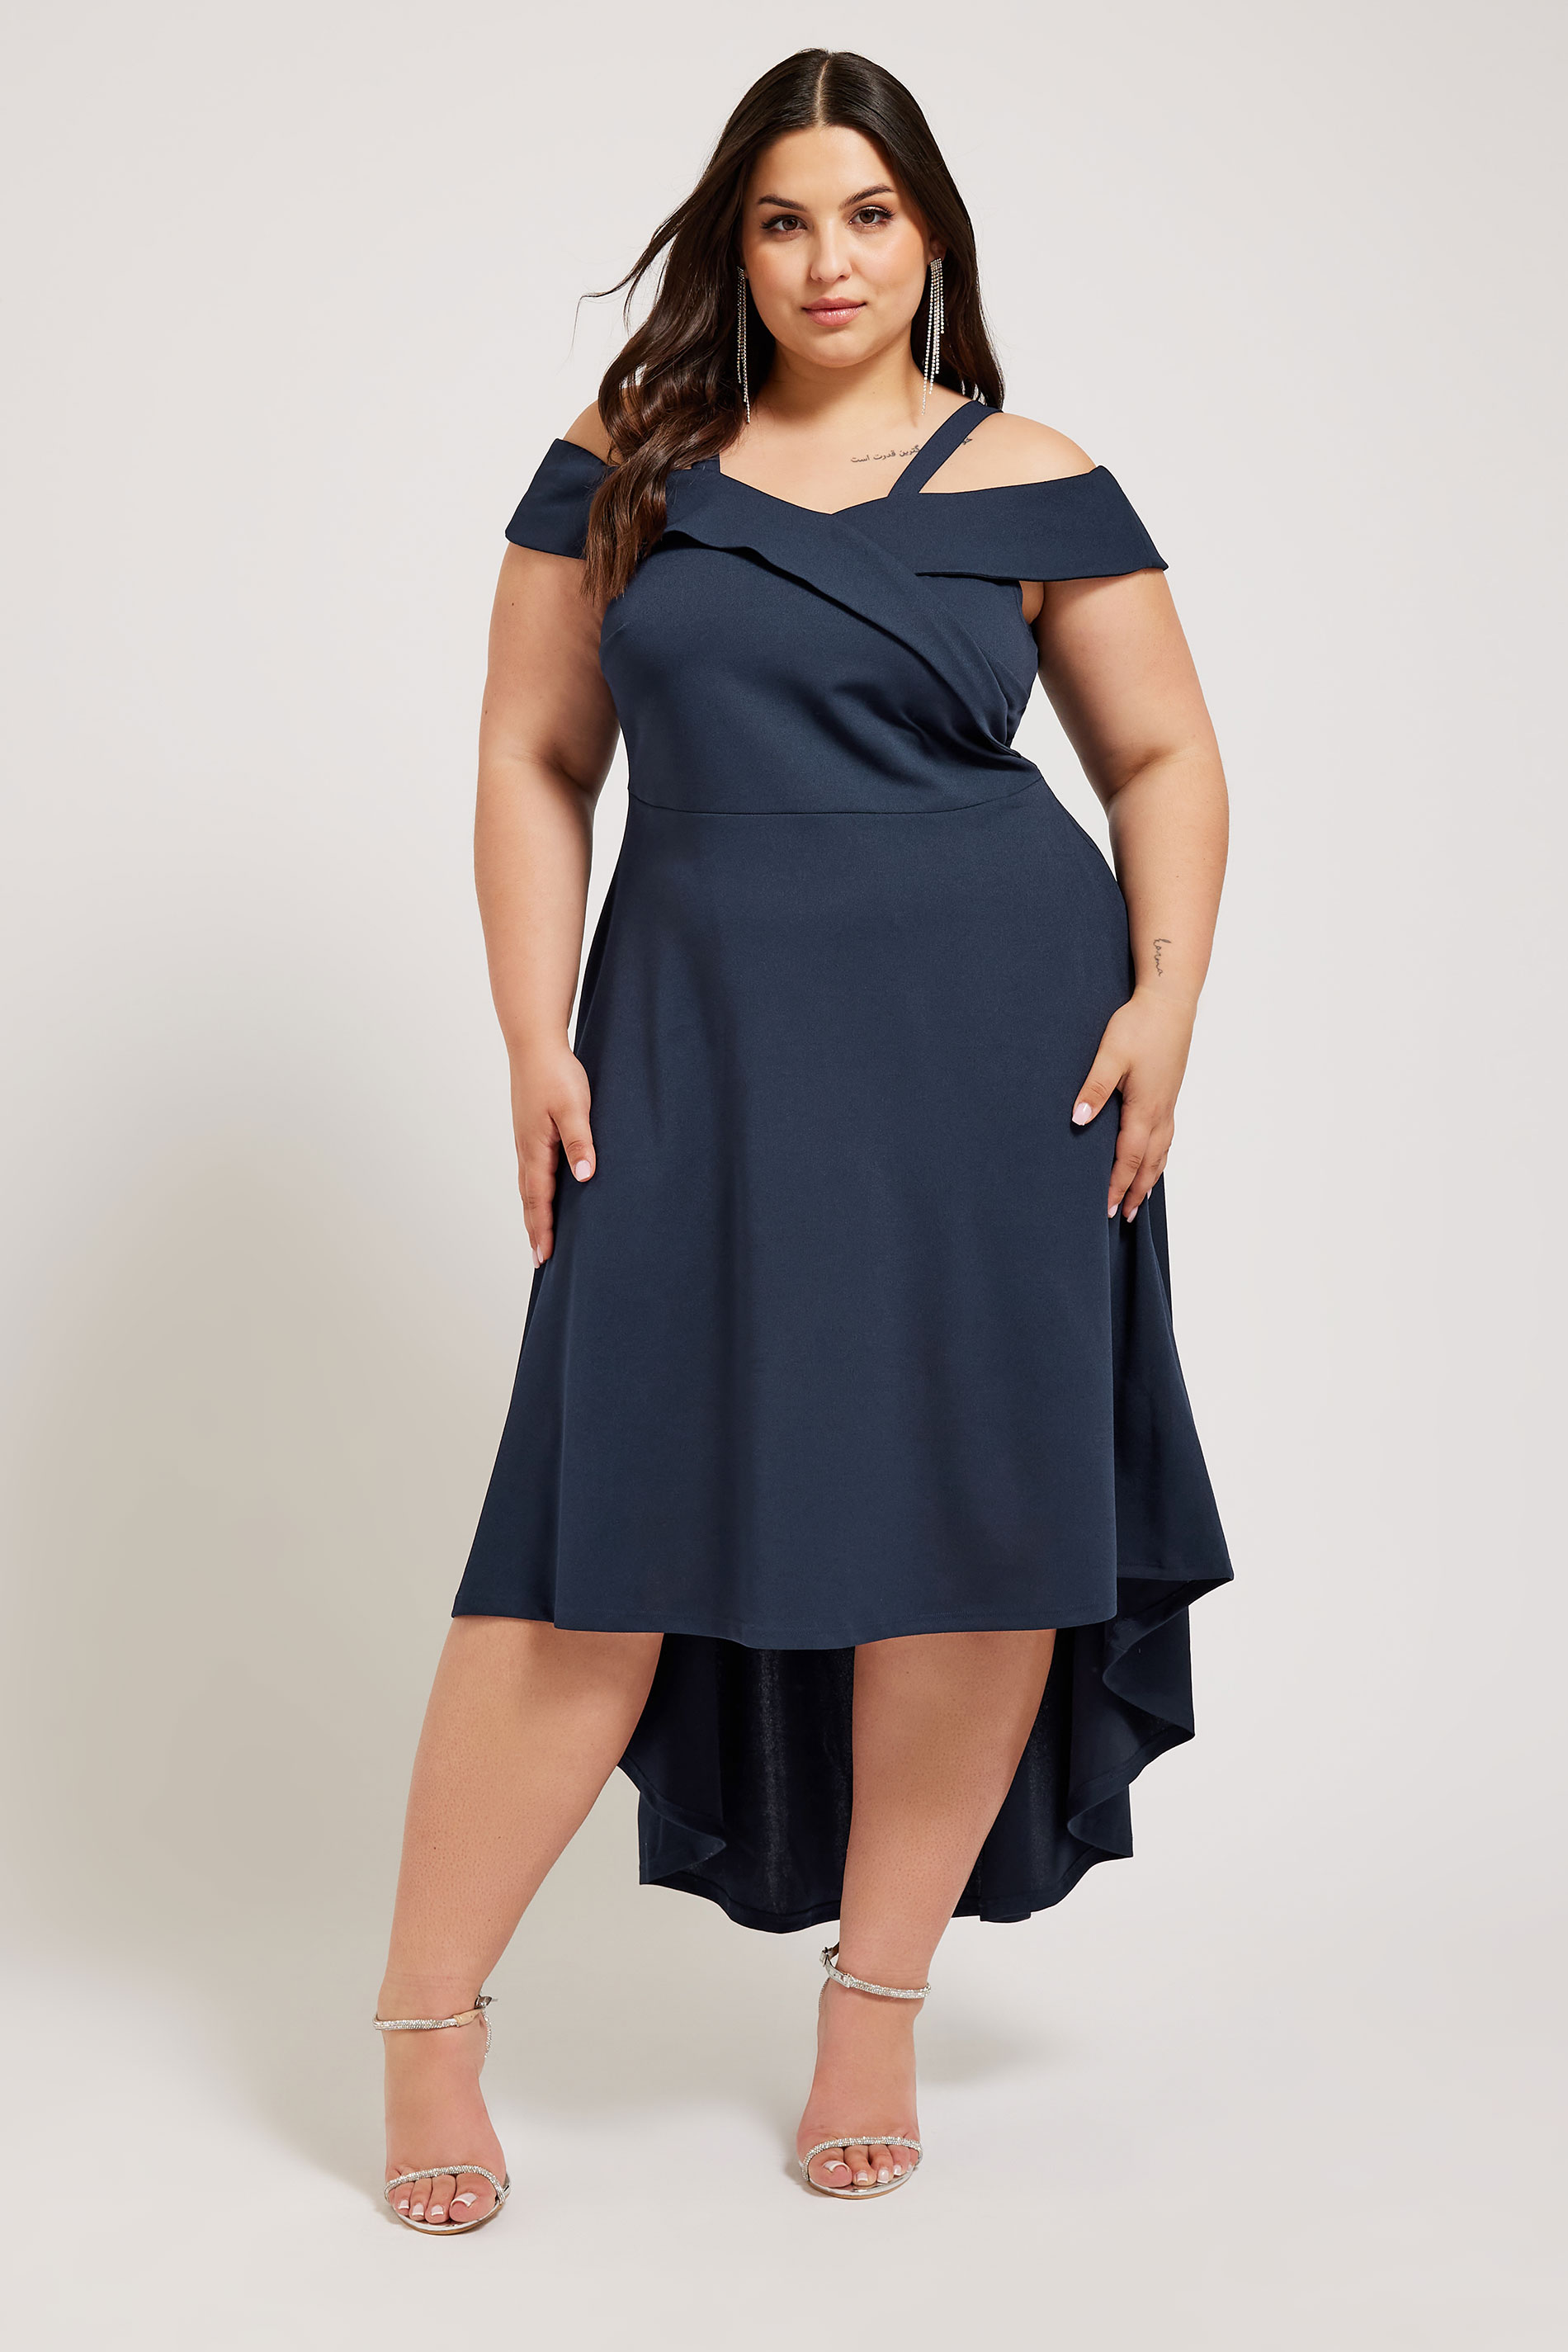 YOURS LONDON Plus Size Navy Blue Bardot Dipped Hem Dress | Yours Clothing 2